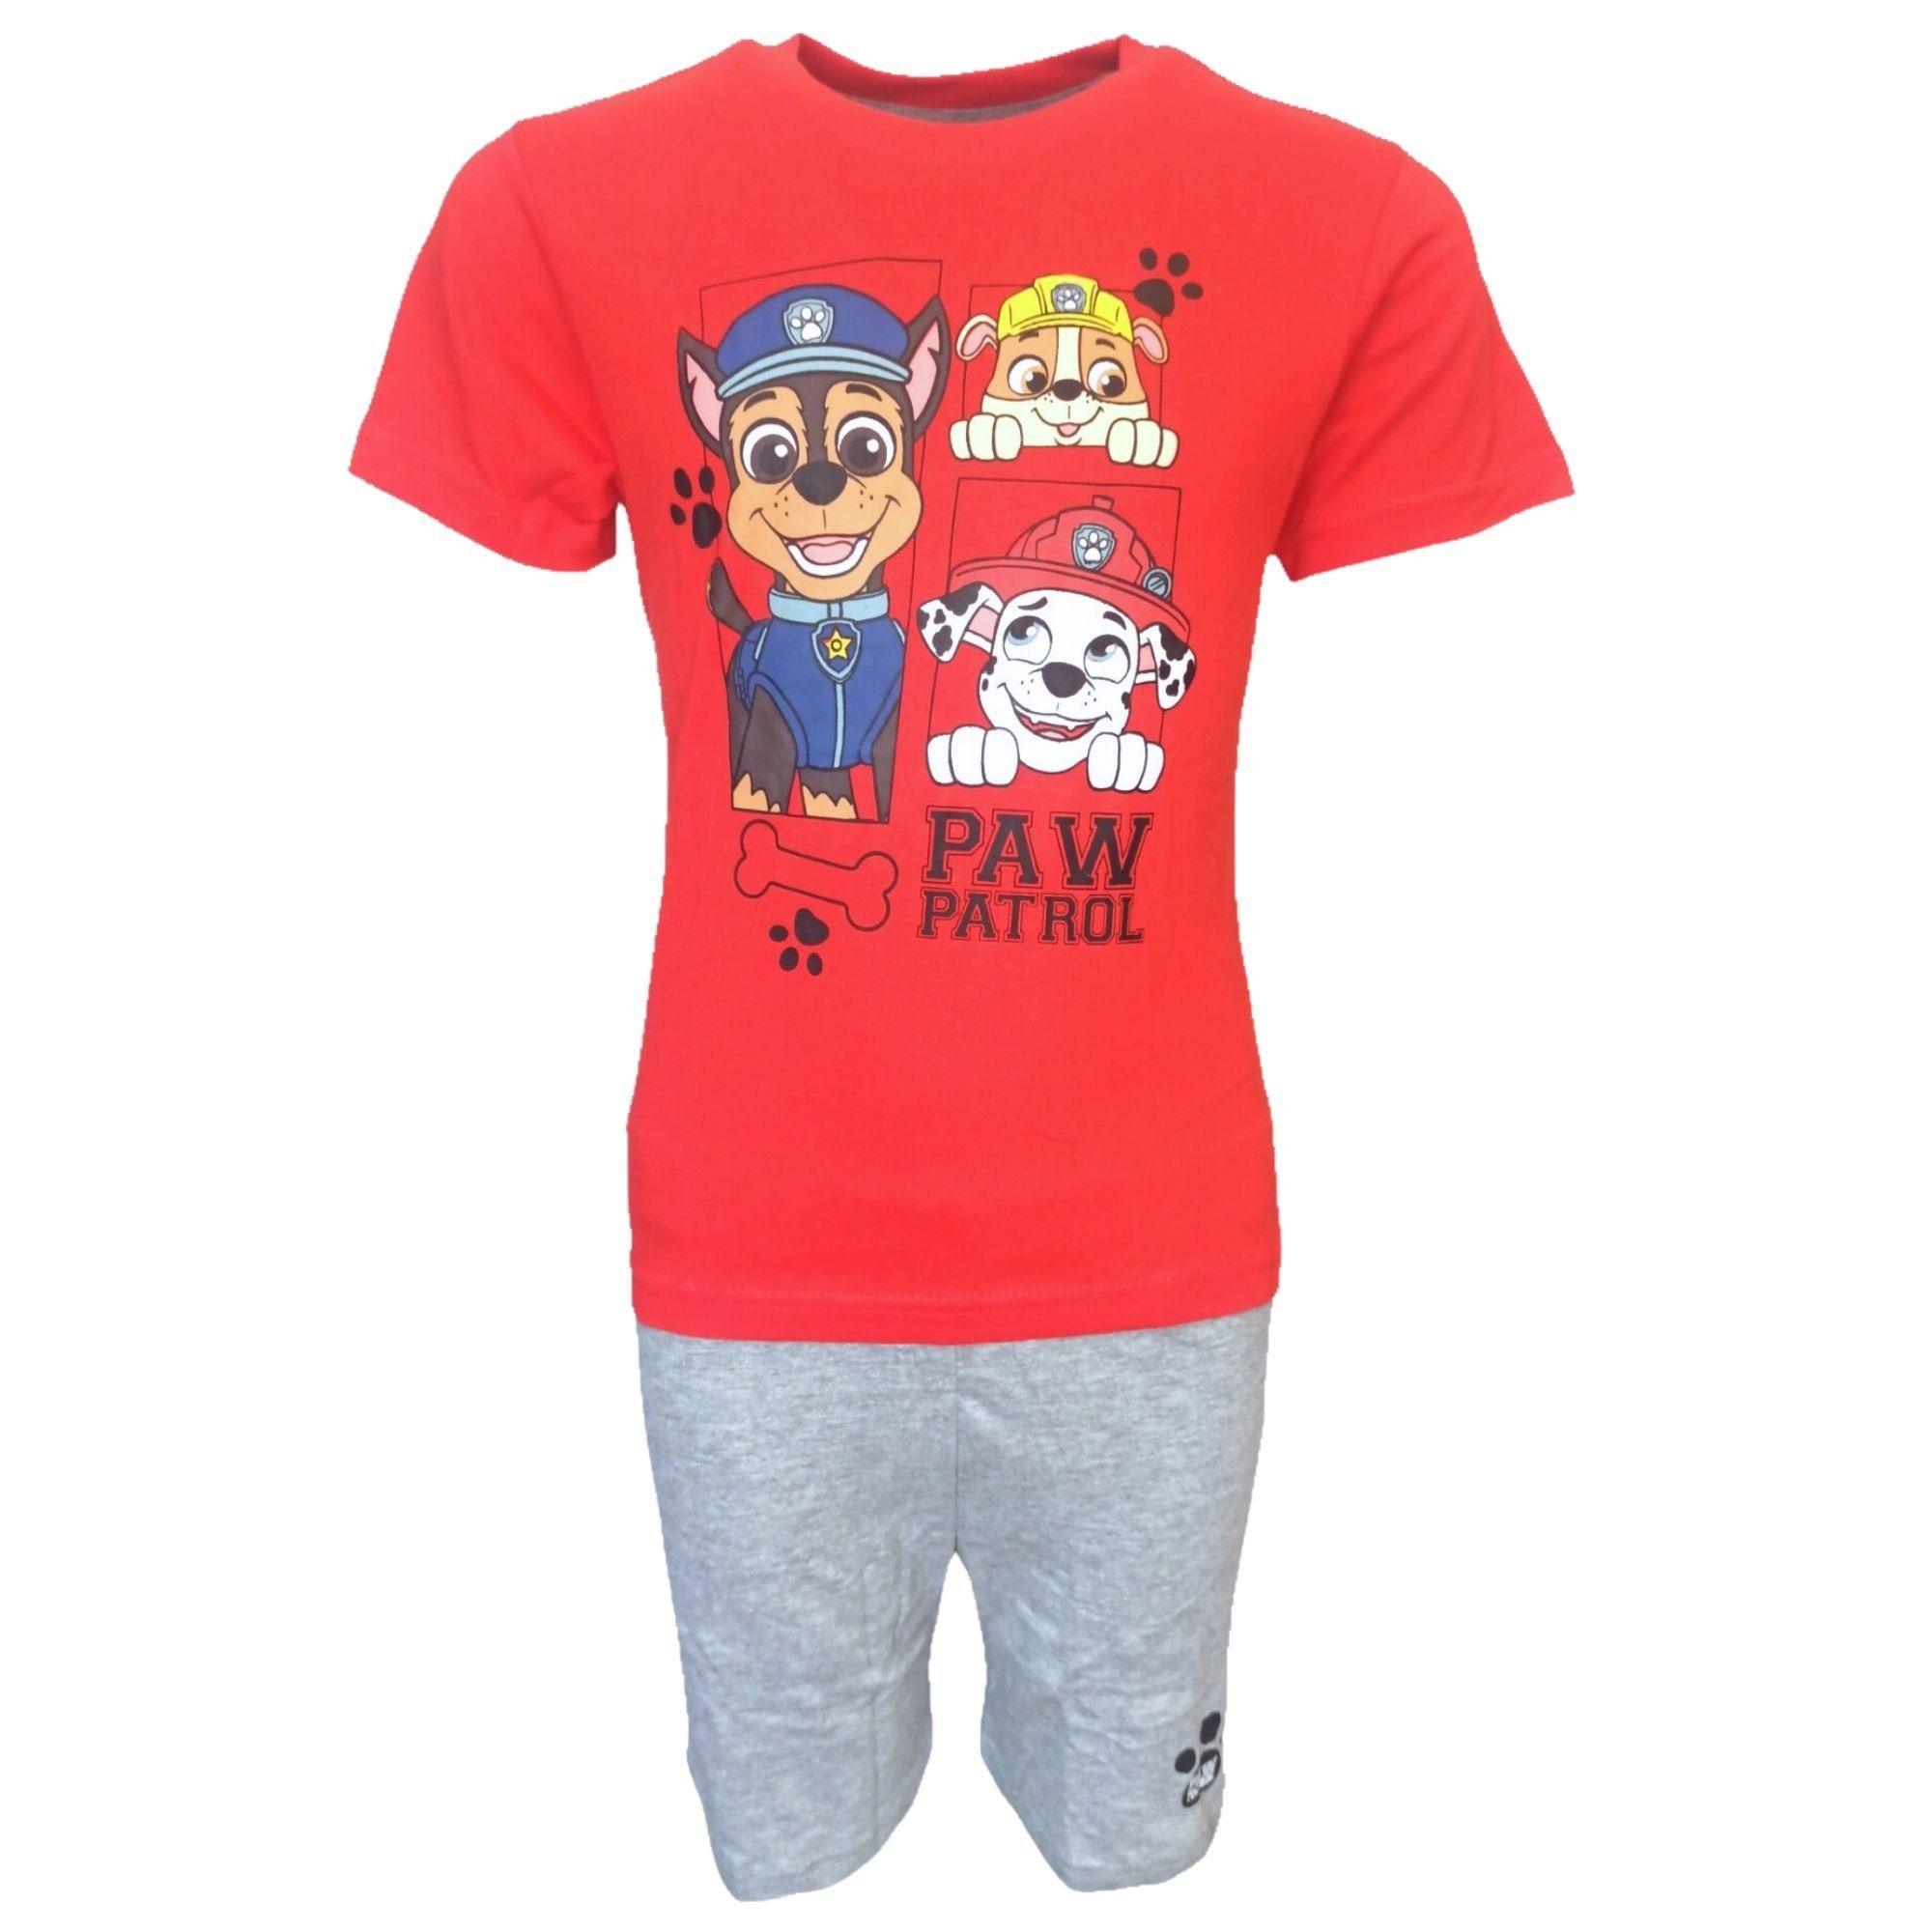 PAW PATROL Schlafanzug (2 tlg) Jungen Pyjama Set - Shorty Gr. 98-128 cm Rot-Grau | Pyjamas